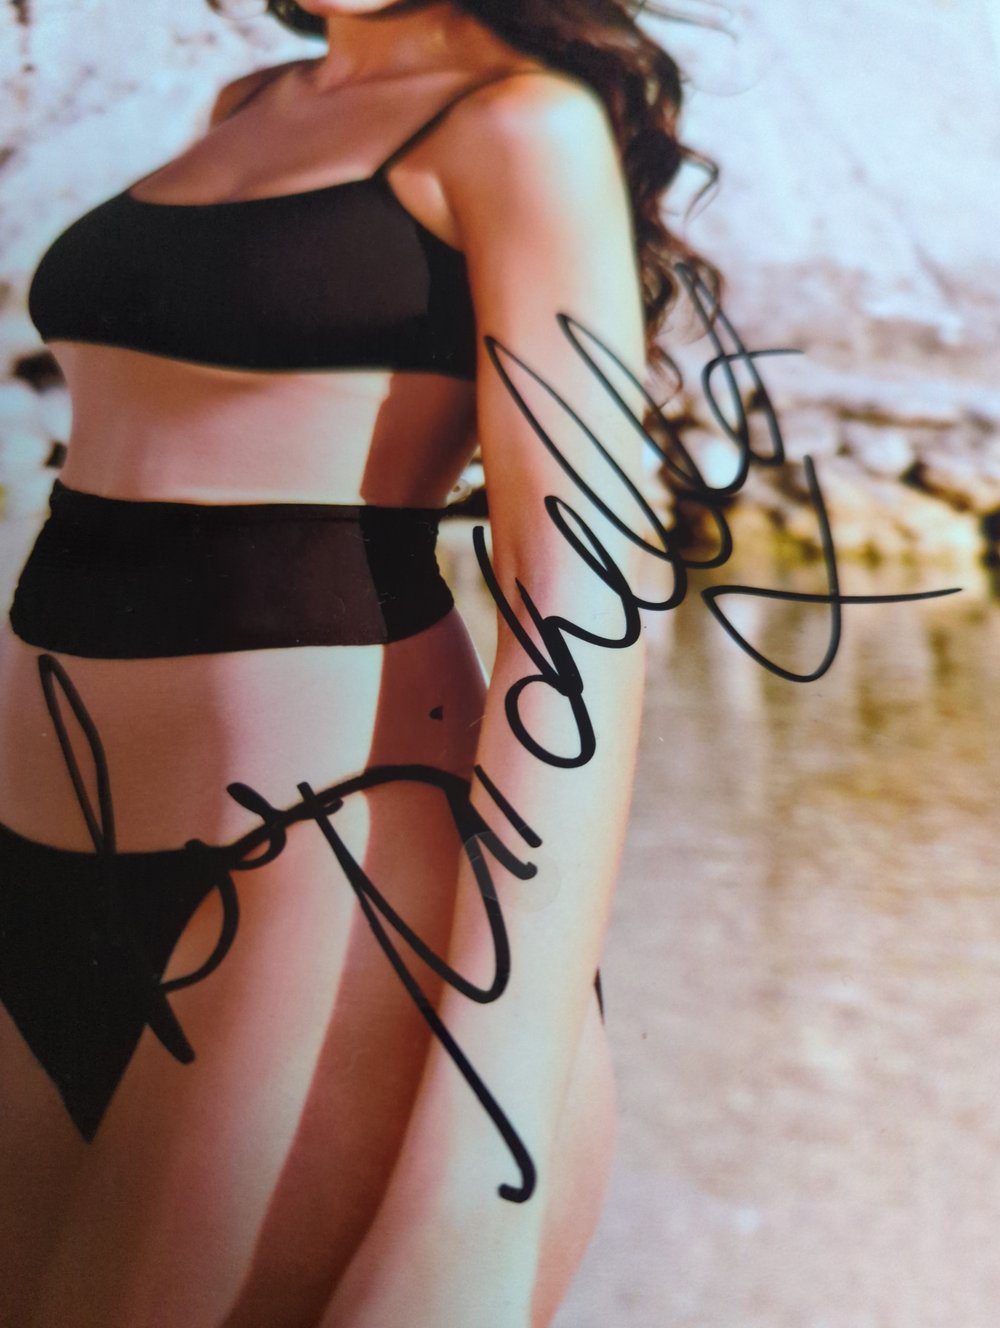 Michelle Keagen Signed Glamour 10x8 Photo